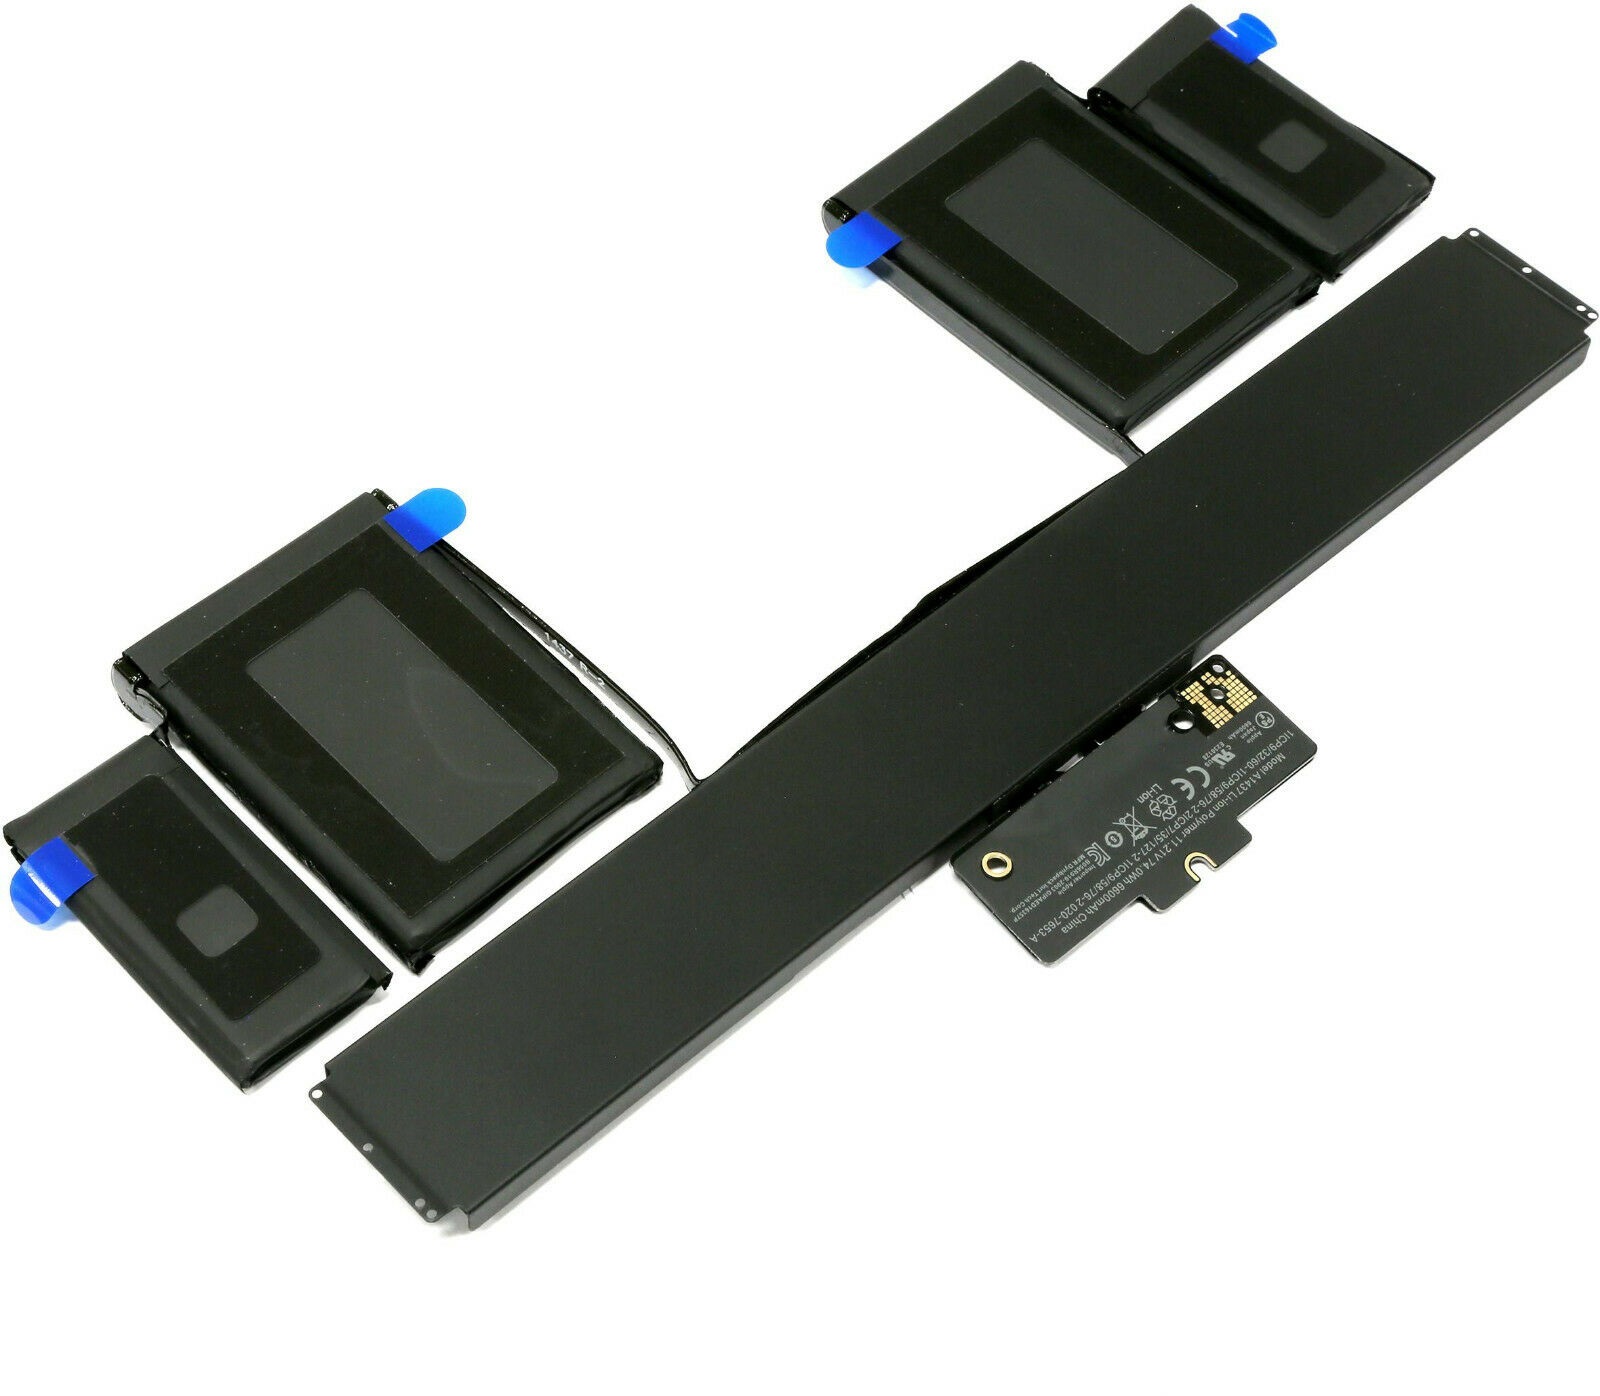 Bateria para A1437 Apple A1425 (Late 2012), Retina MD101 MD101LL/A